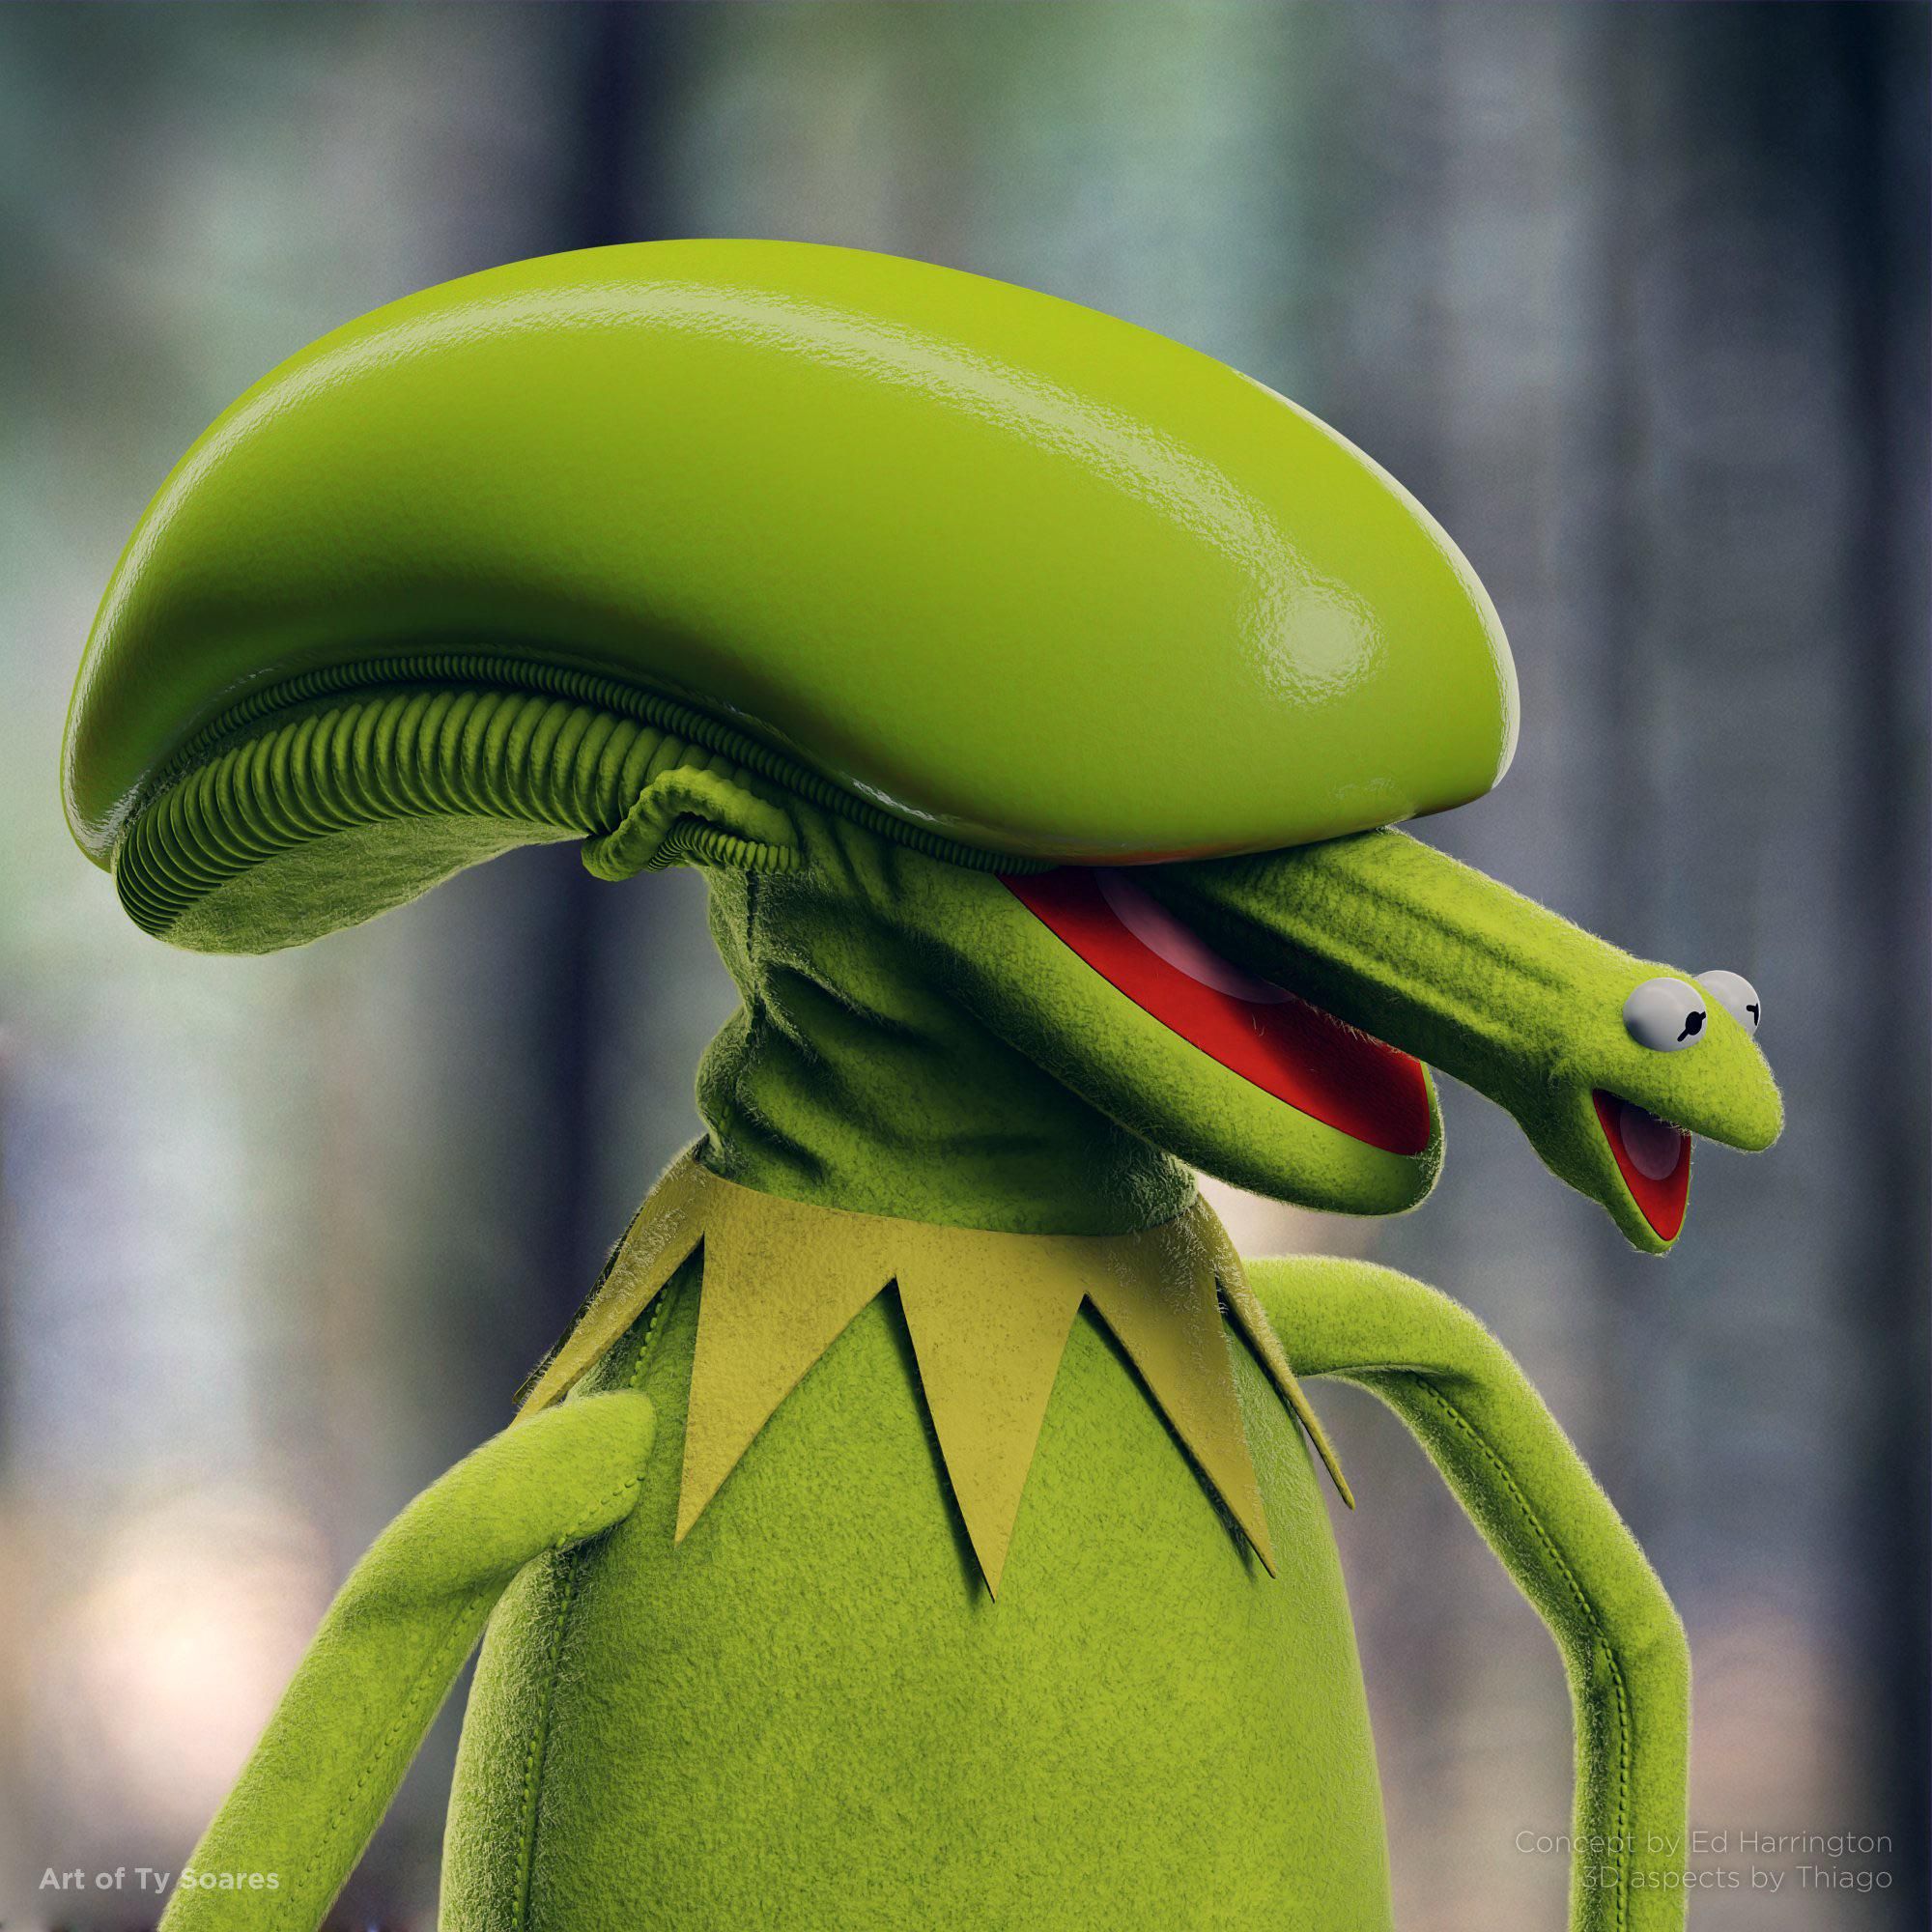 Kermit the Frog as a Xenomorph.